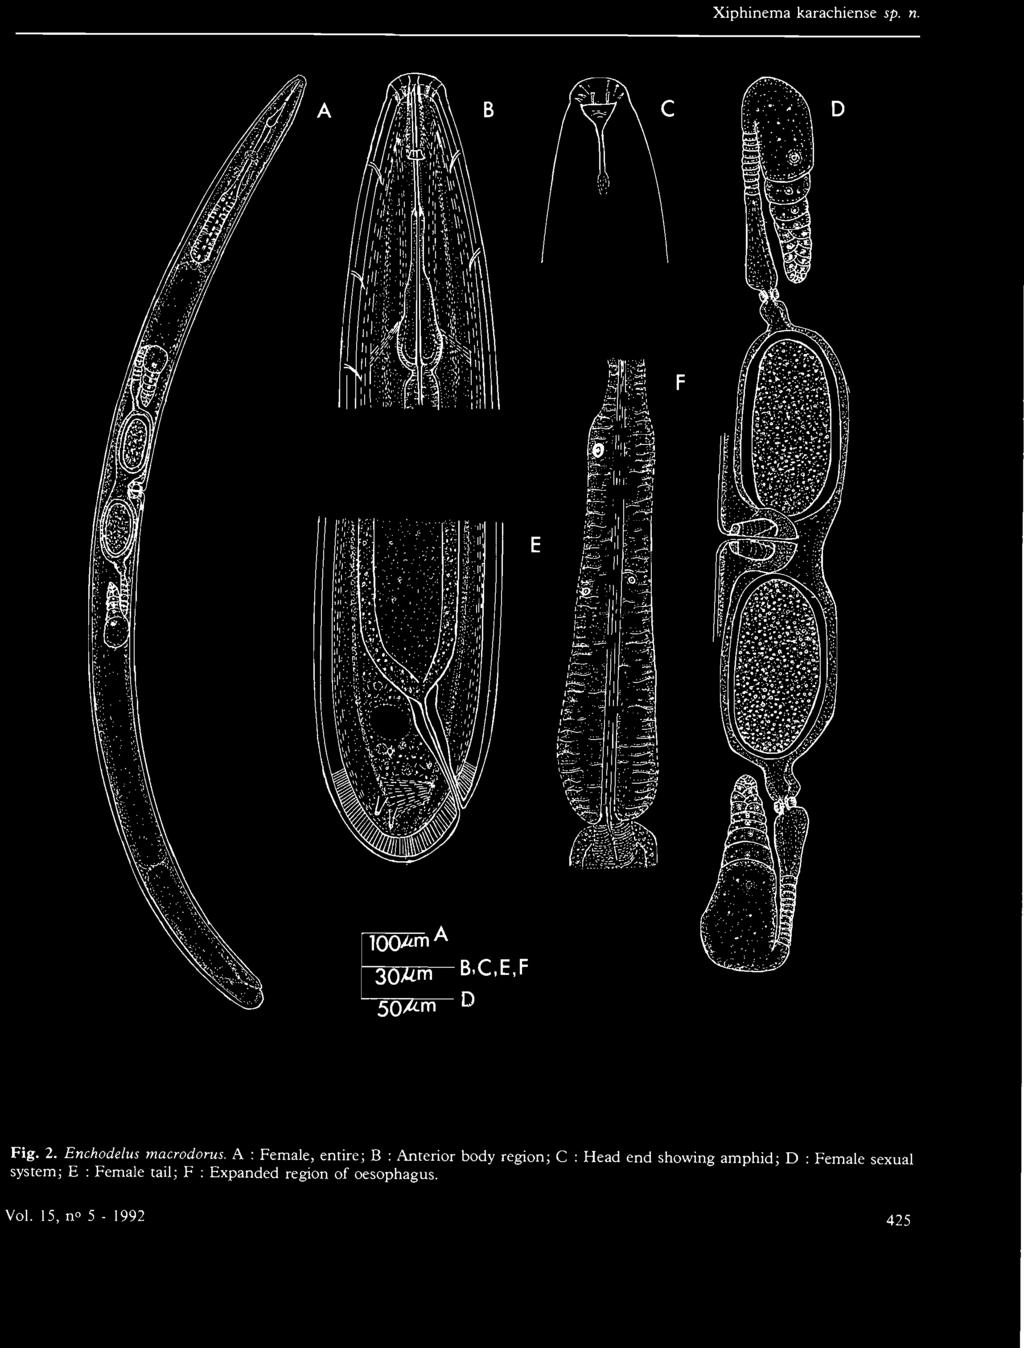 A : Female, entire; B : Anterior body region; C system; E : Female